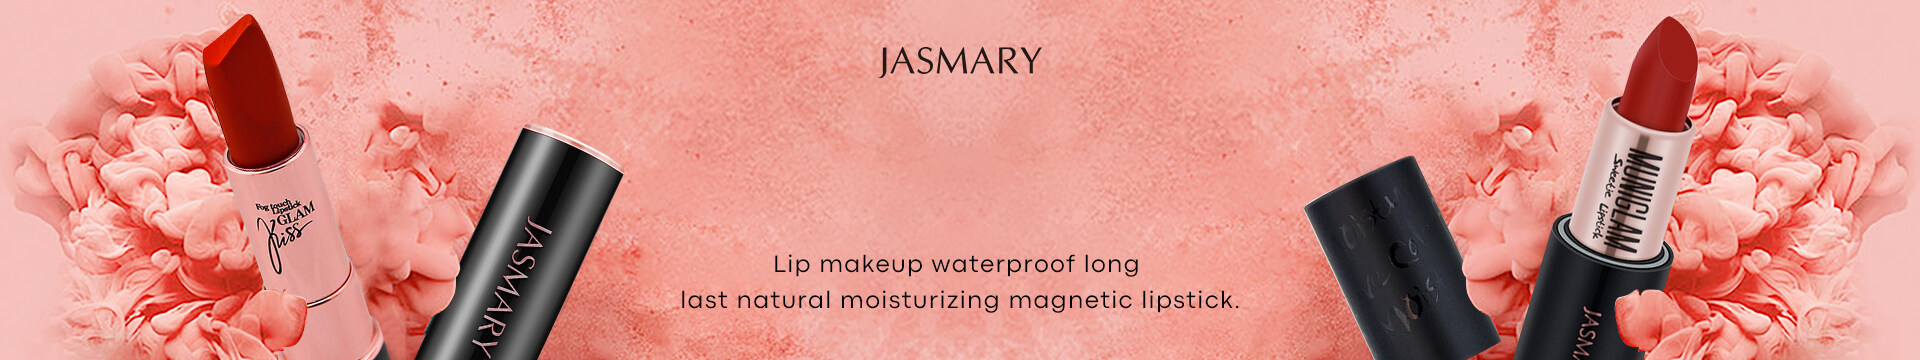 Makeup Supplier Cosmetics Black Long Last Waterproof Mascara,2020 New Korean brand wholesale and retail high quality Wet Fiber Roll Up Mascara Set